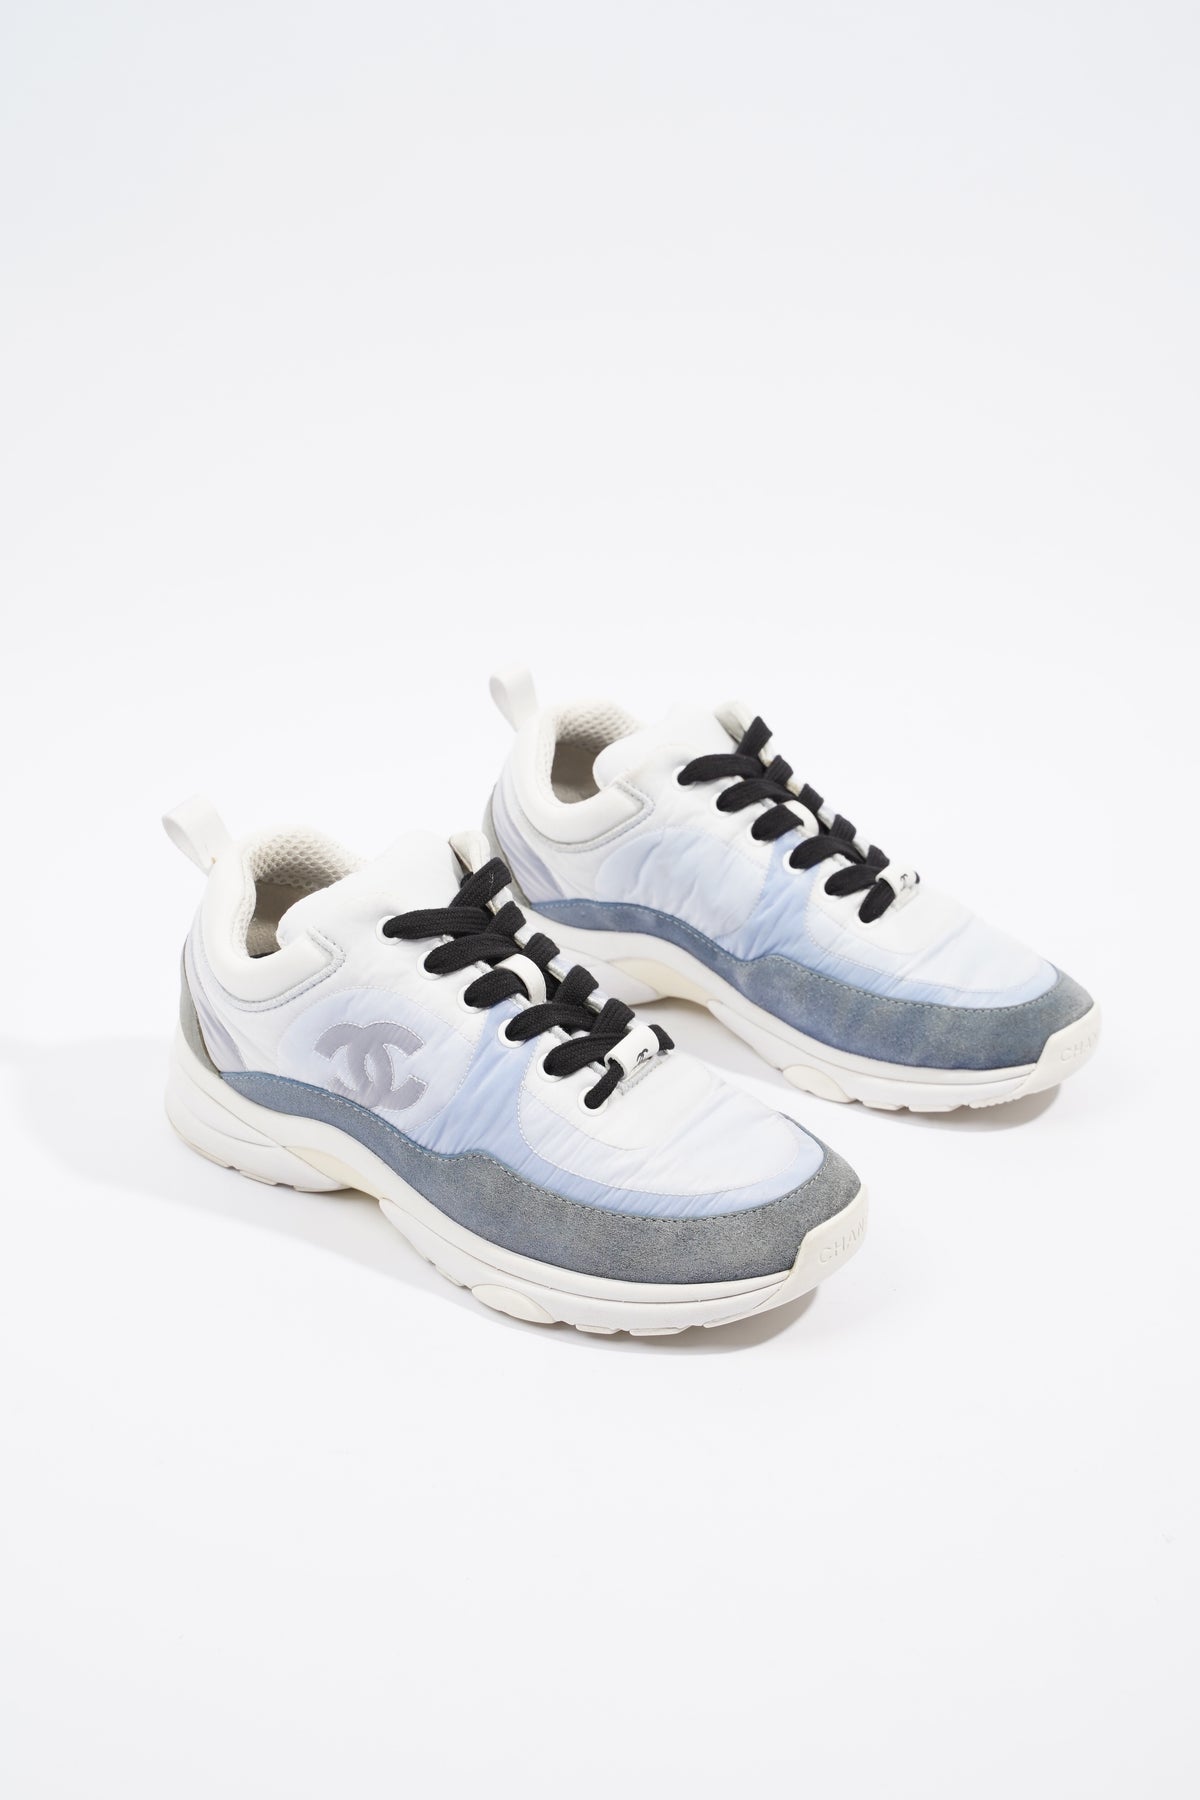 Chanel Suede Calfskin & Nylon Sky Blue Low Top Sneakers